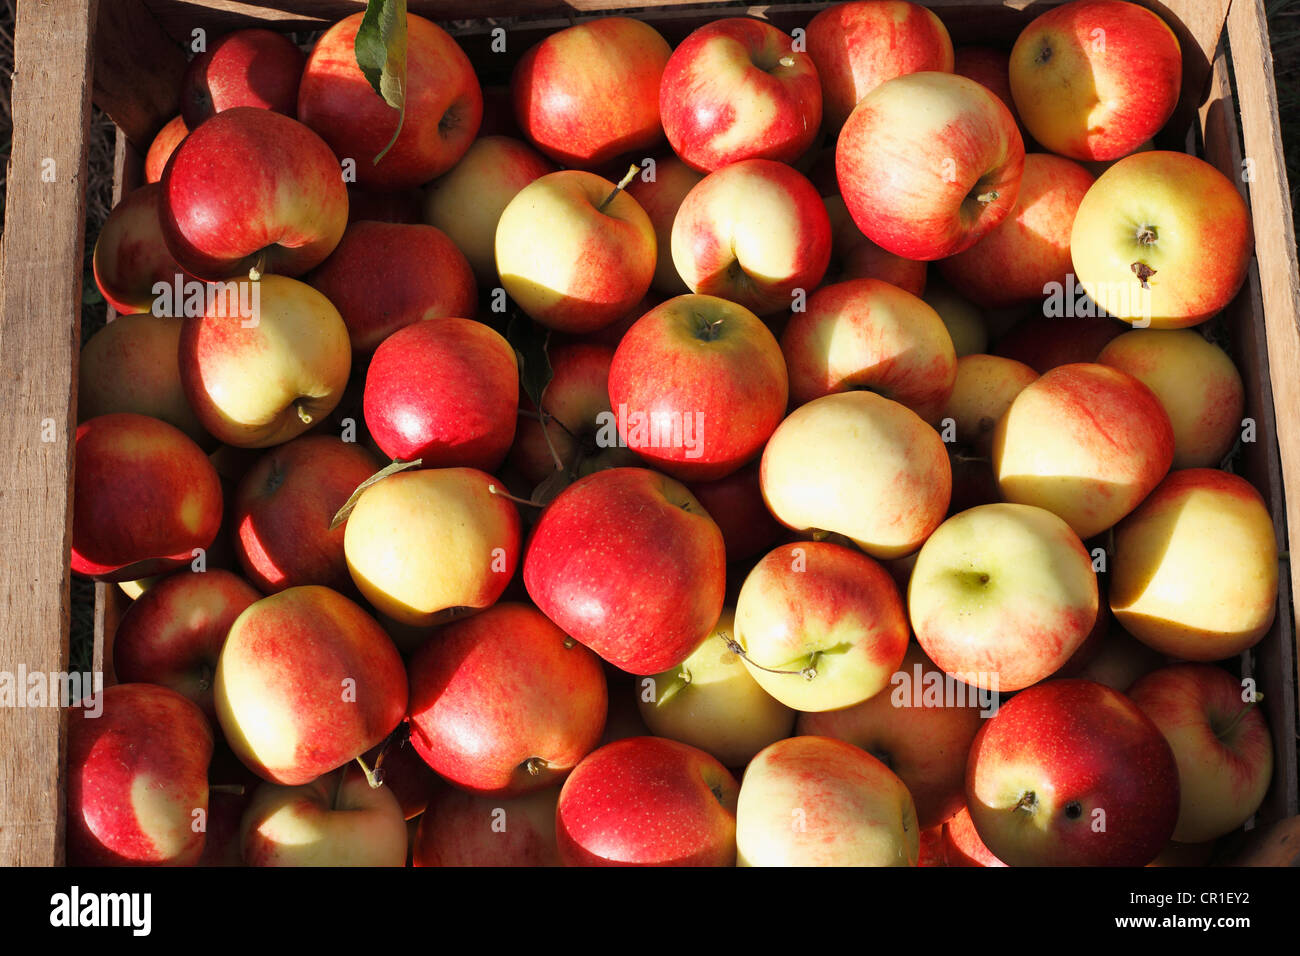 Apples in a crate, Oberschwarzach, Steigerwald, Lower Franconia, Franconia, Bavaria, Germany, Europe Stock Photo